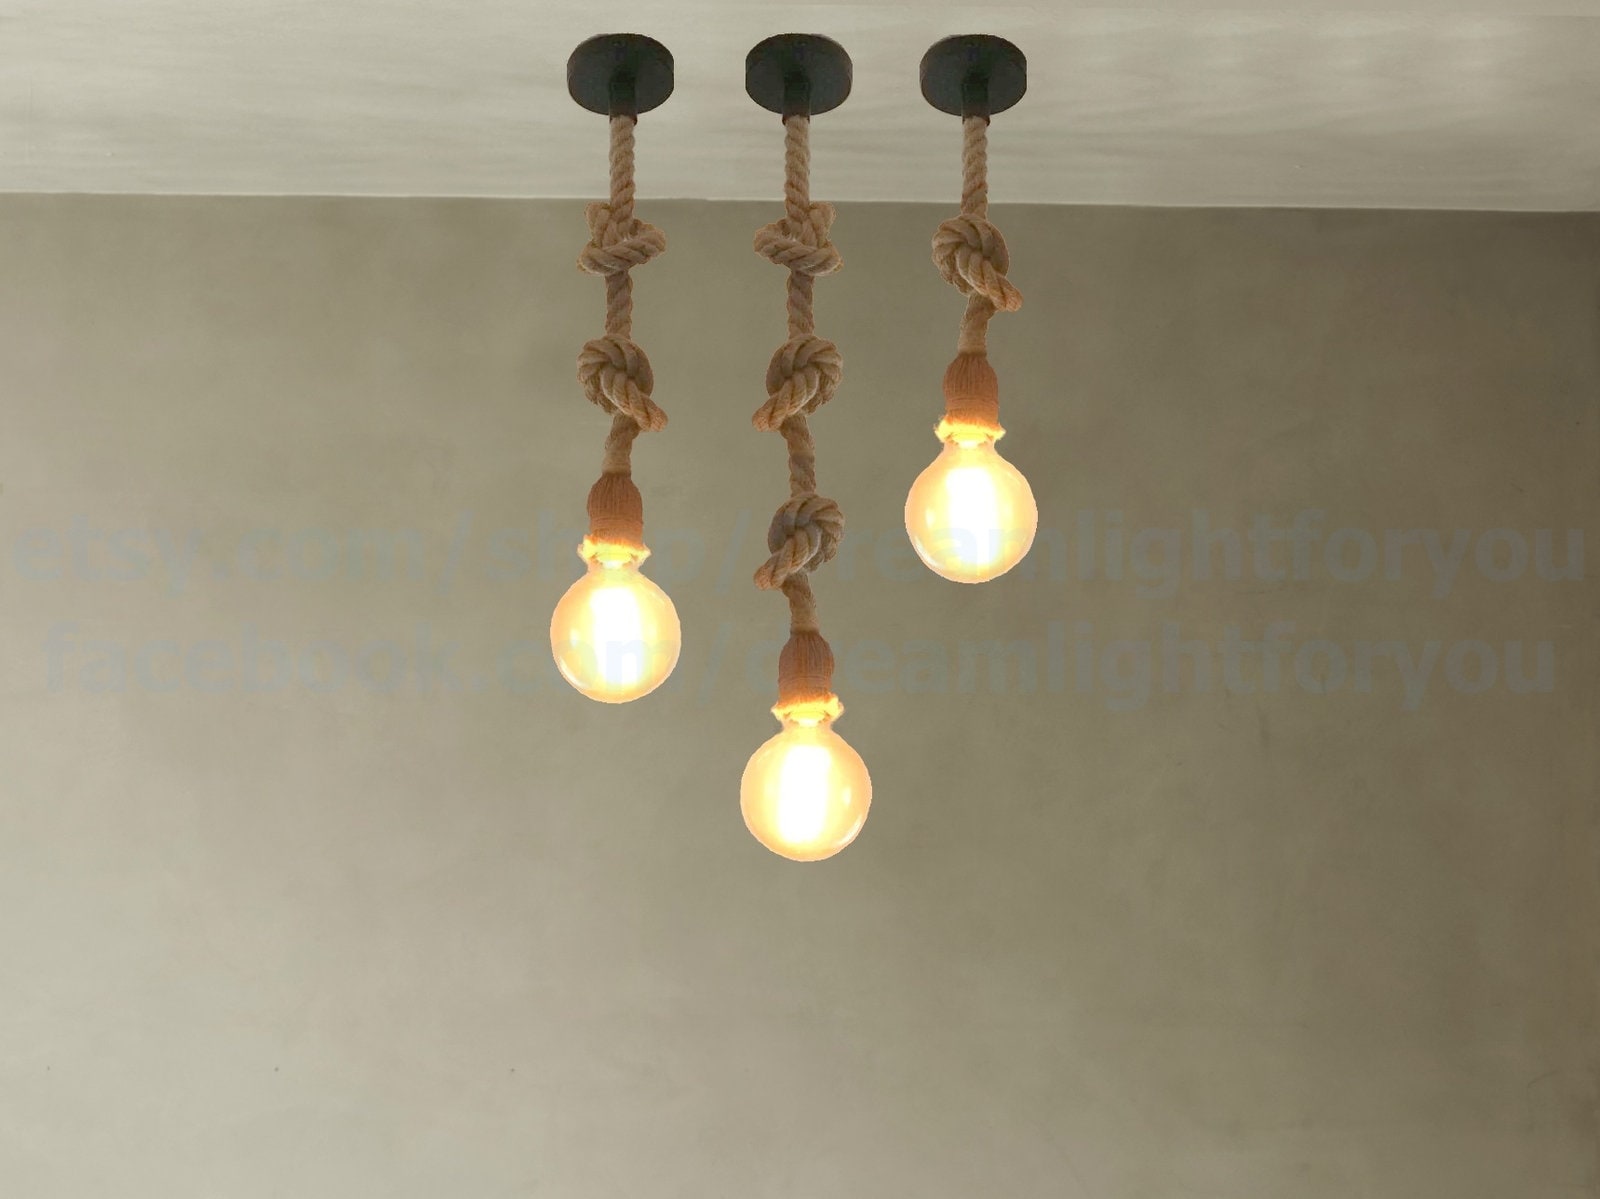 Vintage Rope Light Ceiling Pendant Chandelier Industrial Lamp 3 Heads Fixture US 